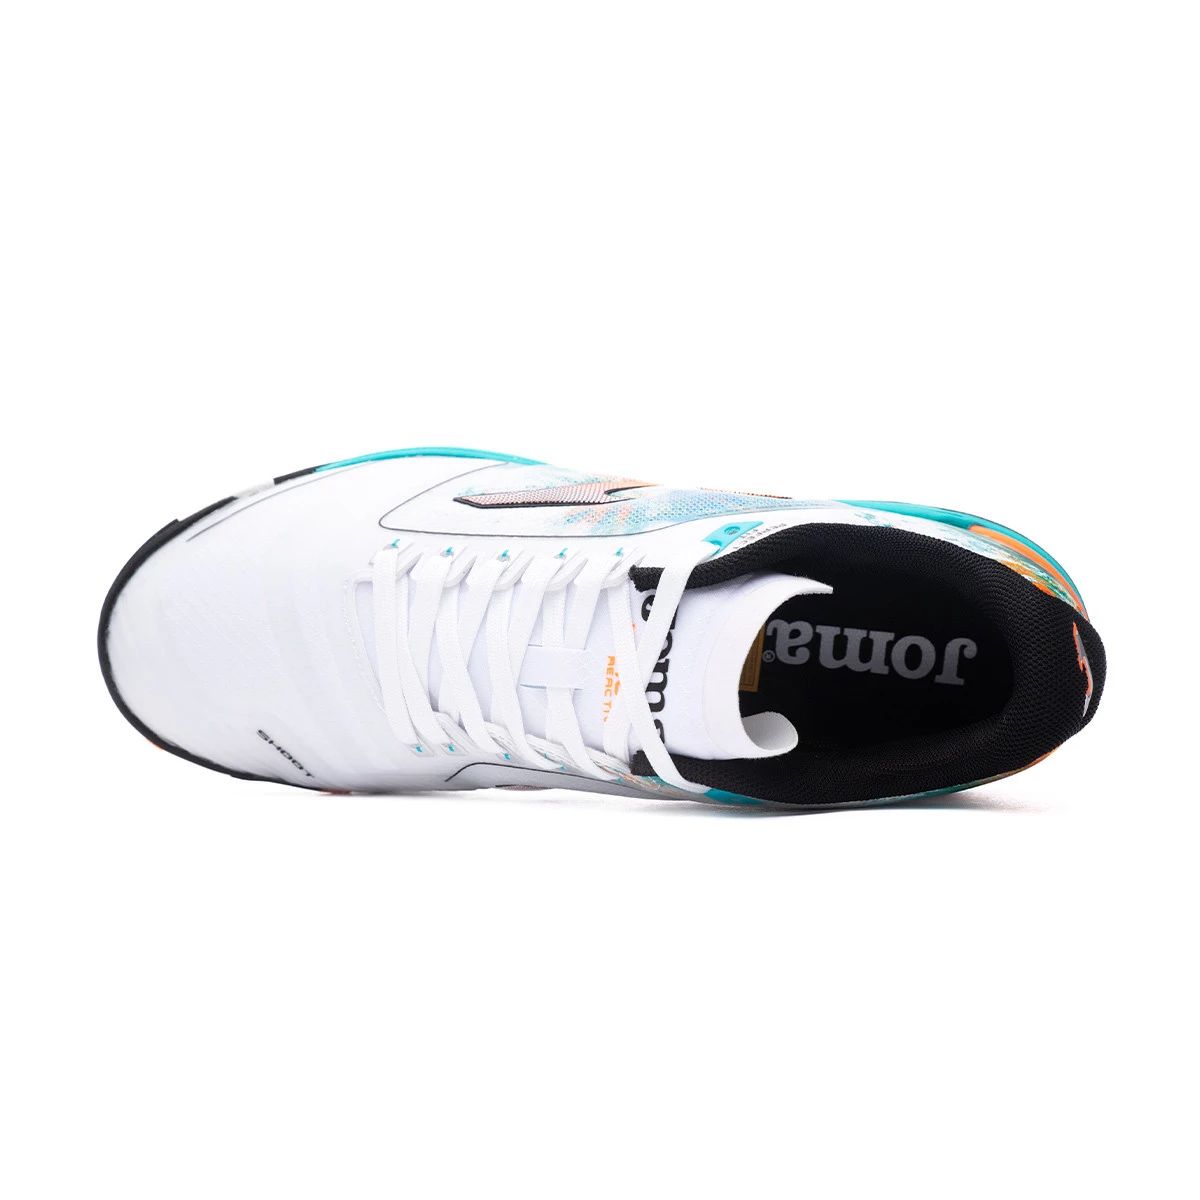 Futsal shoes INVICTO [white and blue]